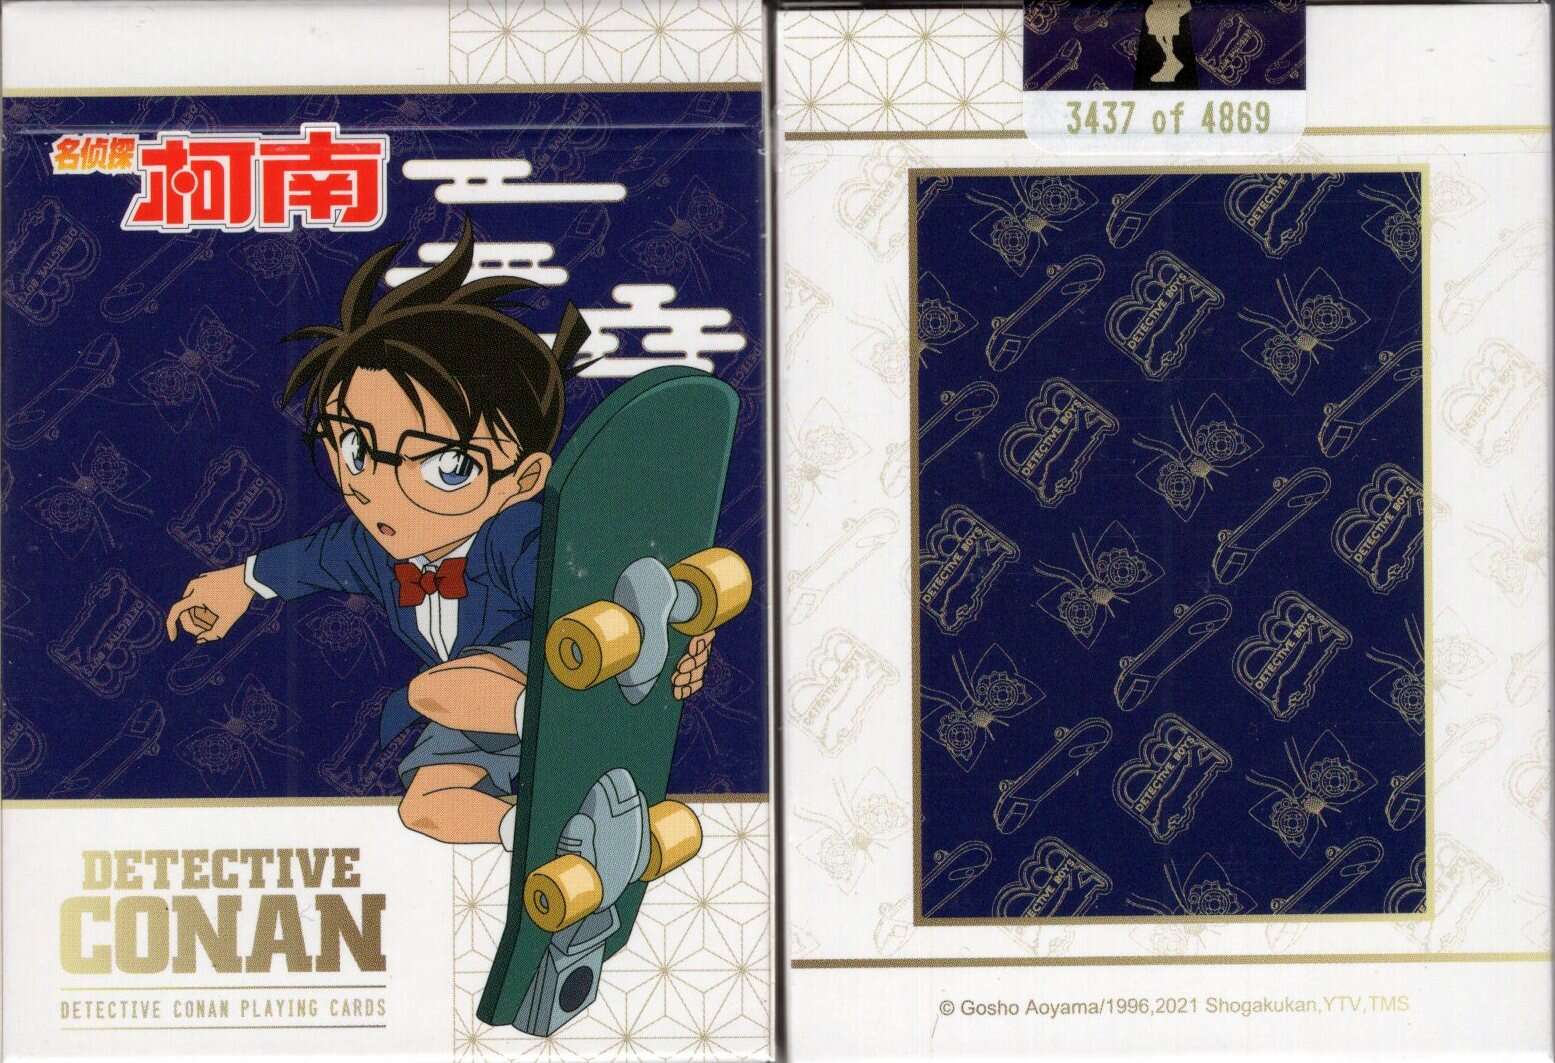 Is Detective Conan a good anime? - Quora